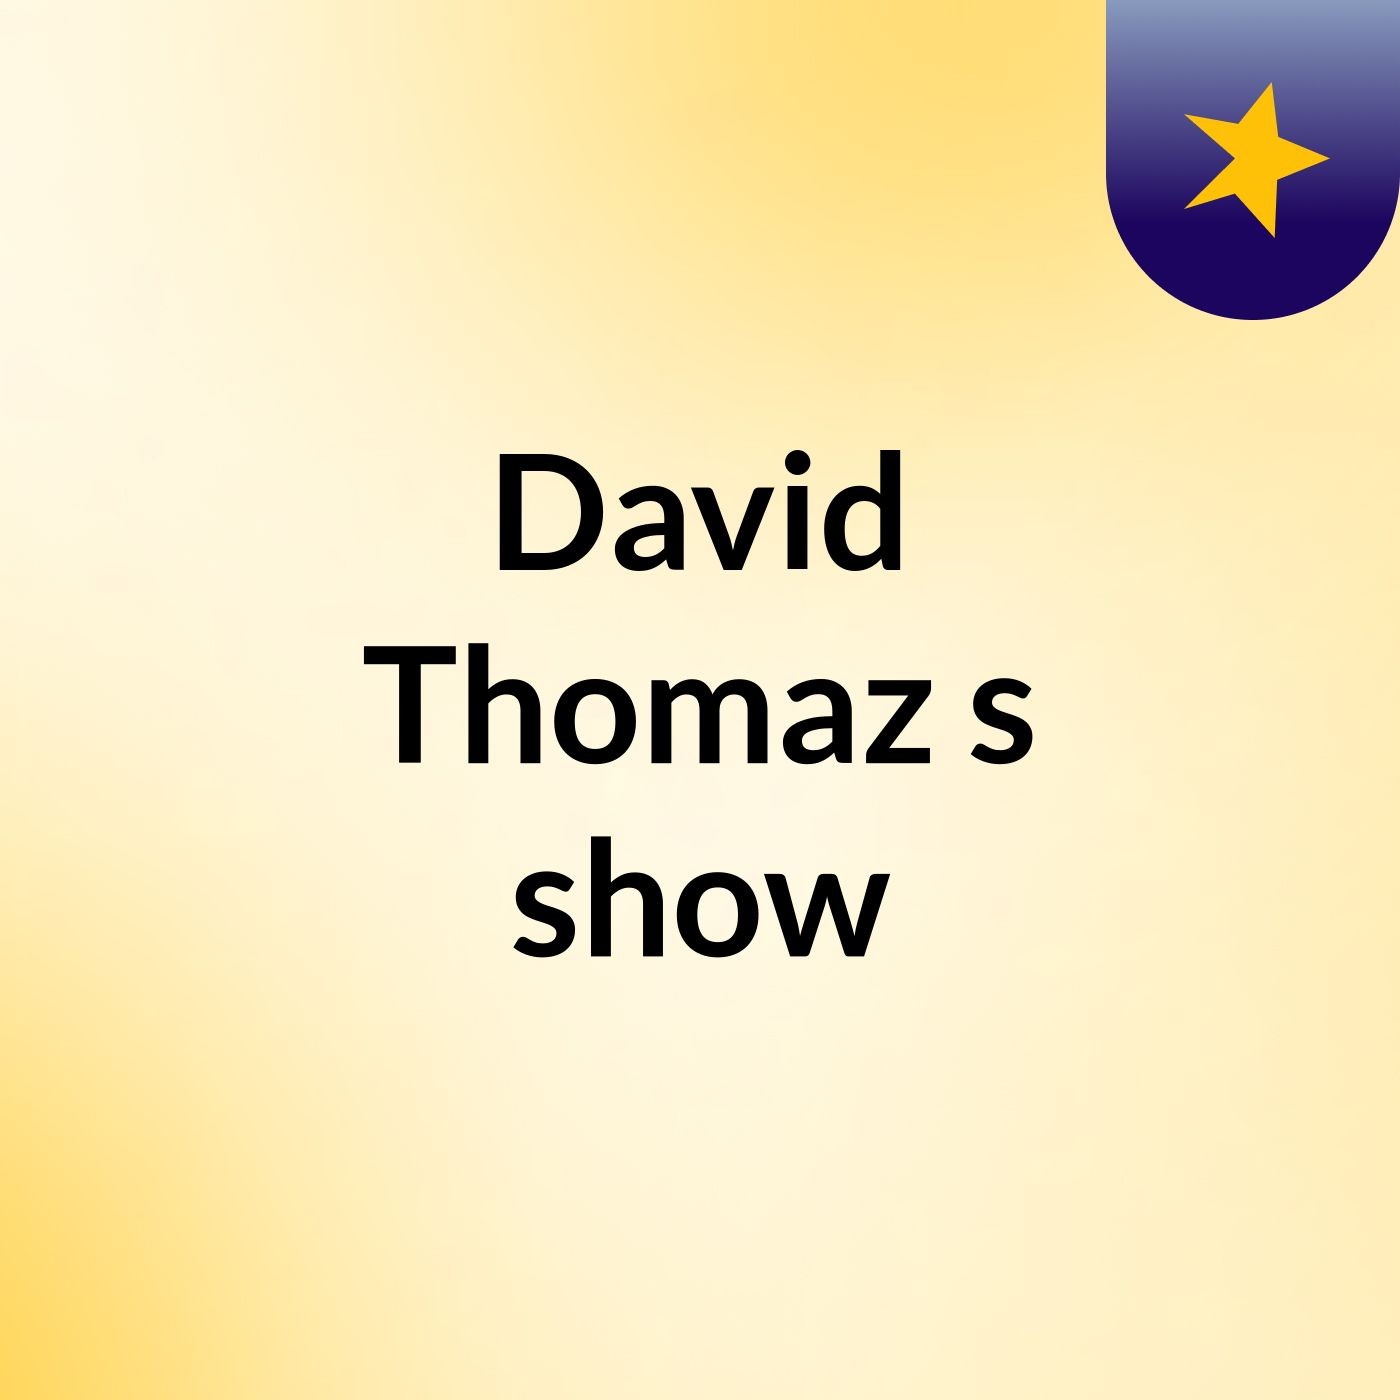 David Thomaz's show